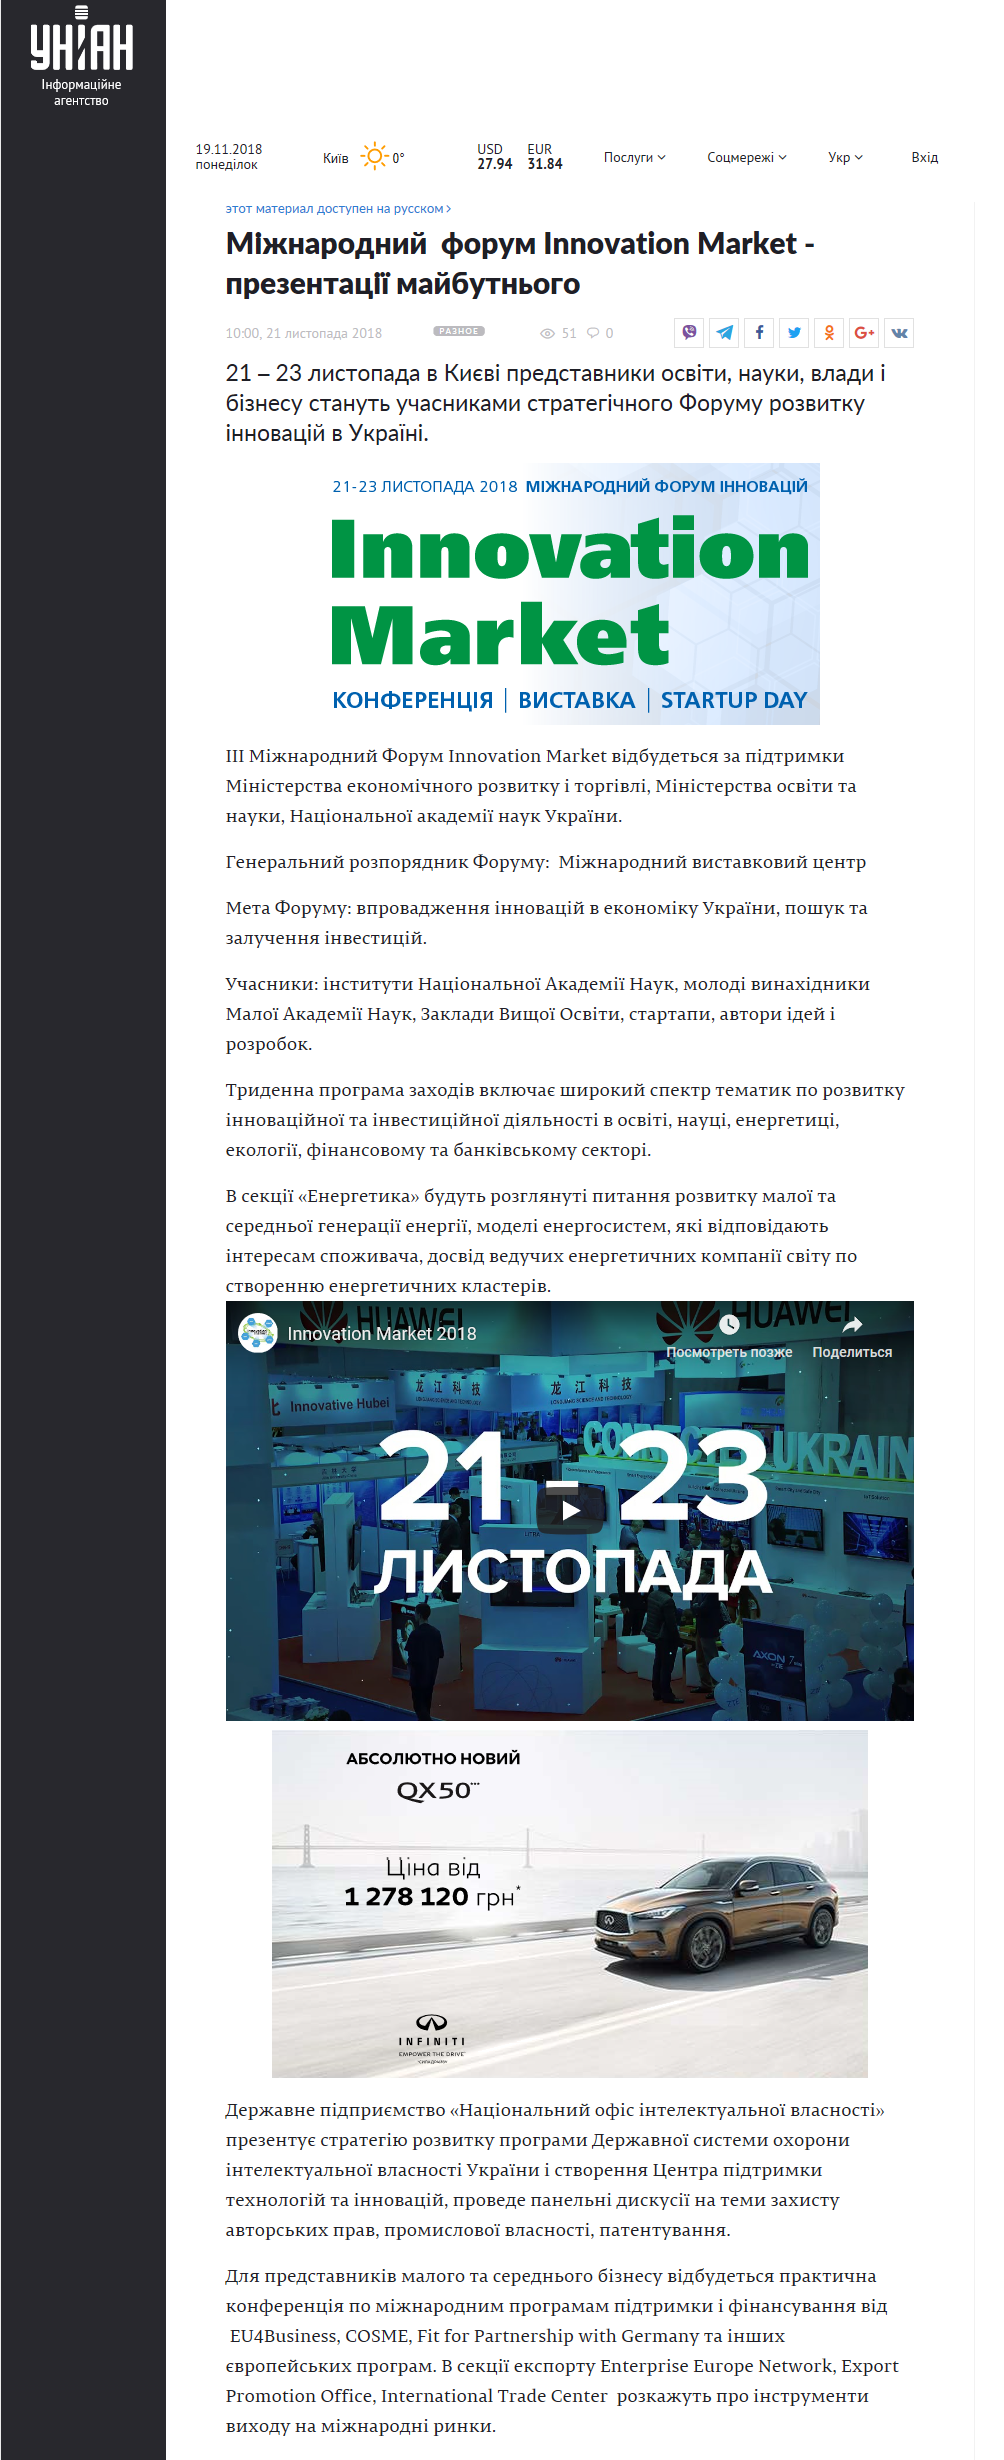 https://www.unian.ua/common/10331526-mizhnarodniy-forum-innovation-market-prezentaciji-maybutnogo.html